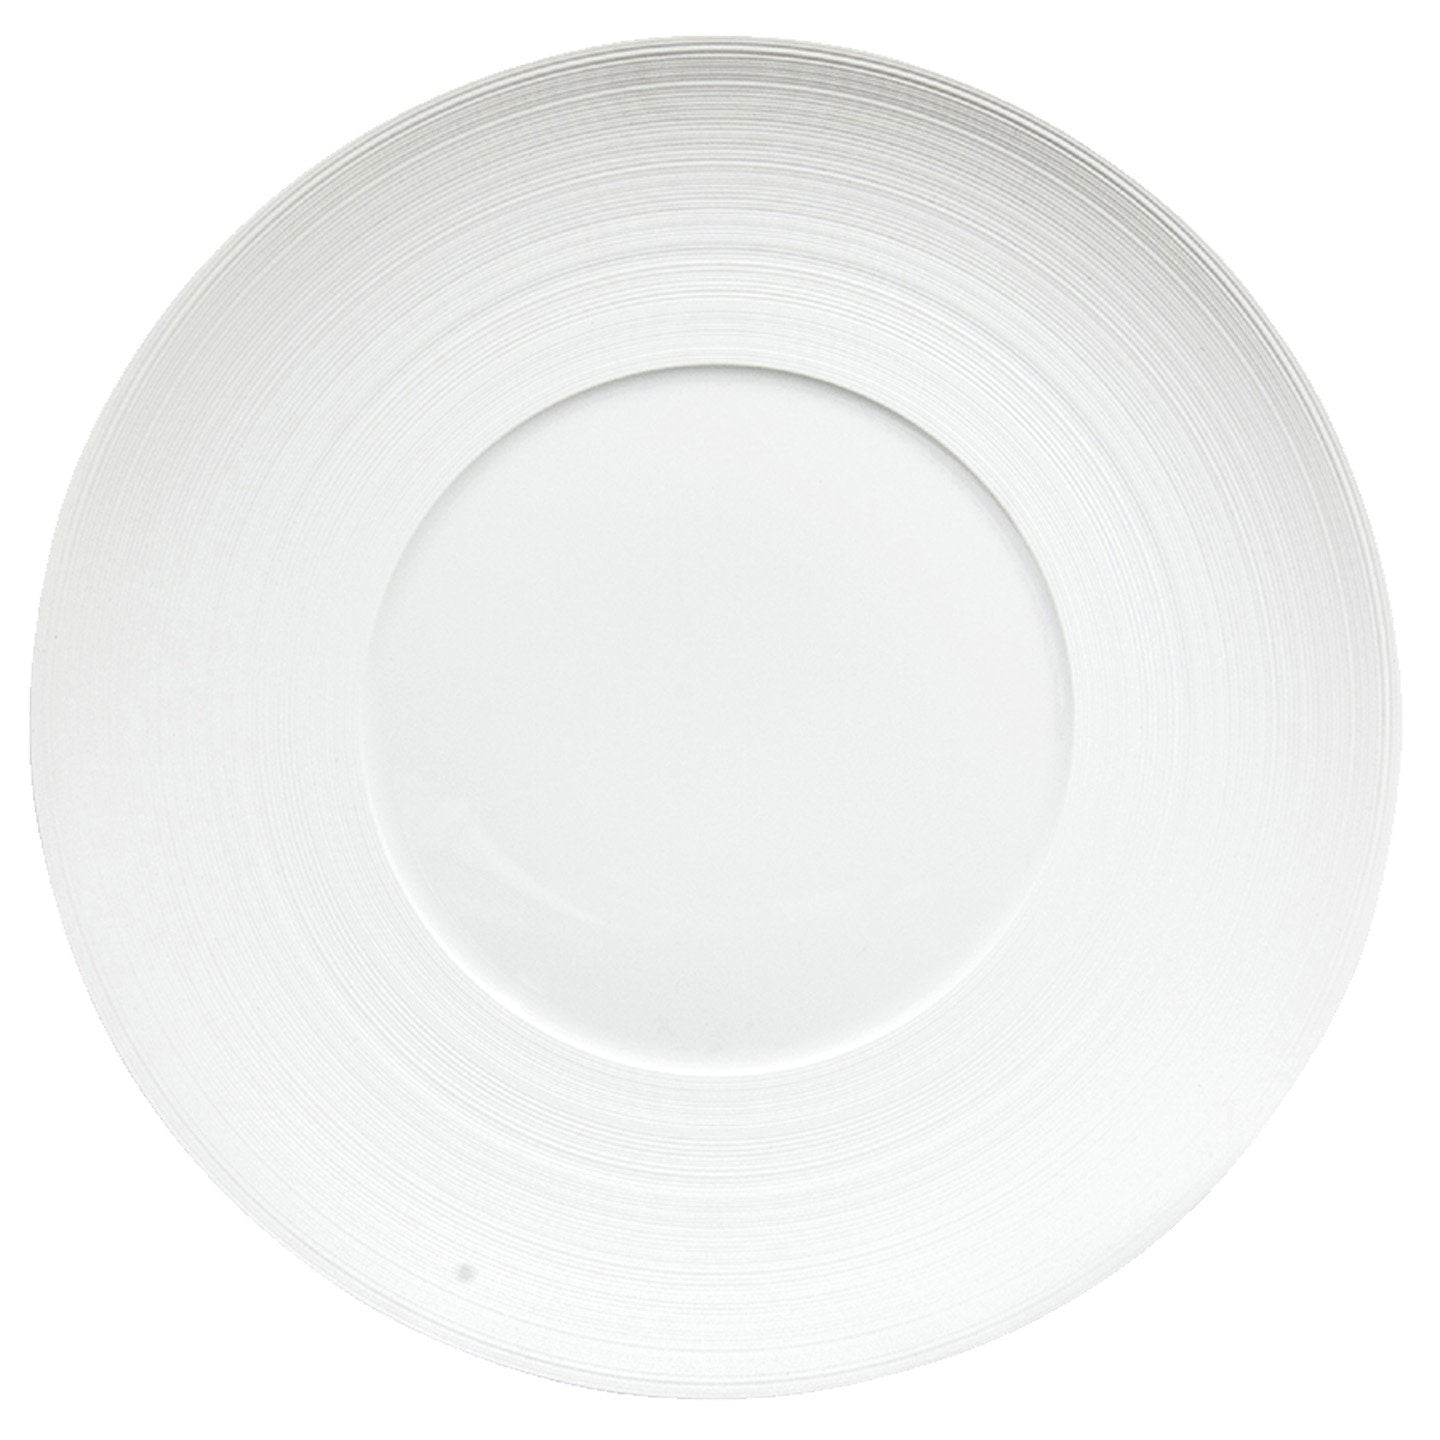 Hemisphere Charger Plate - White Satin